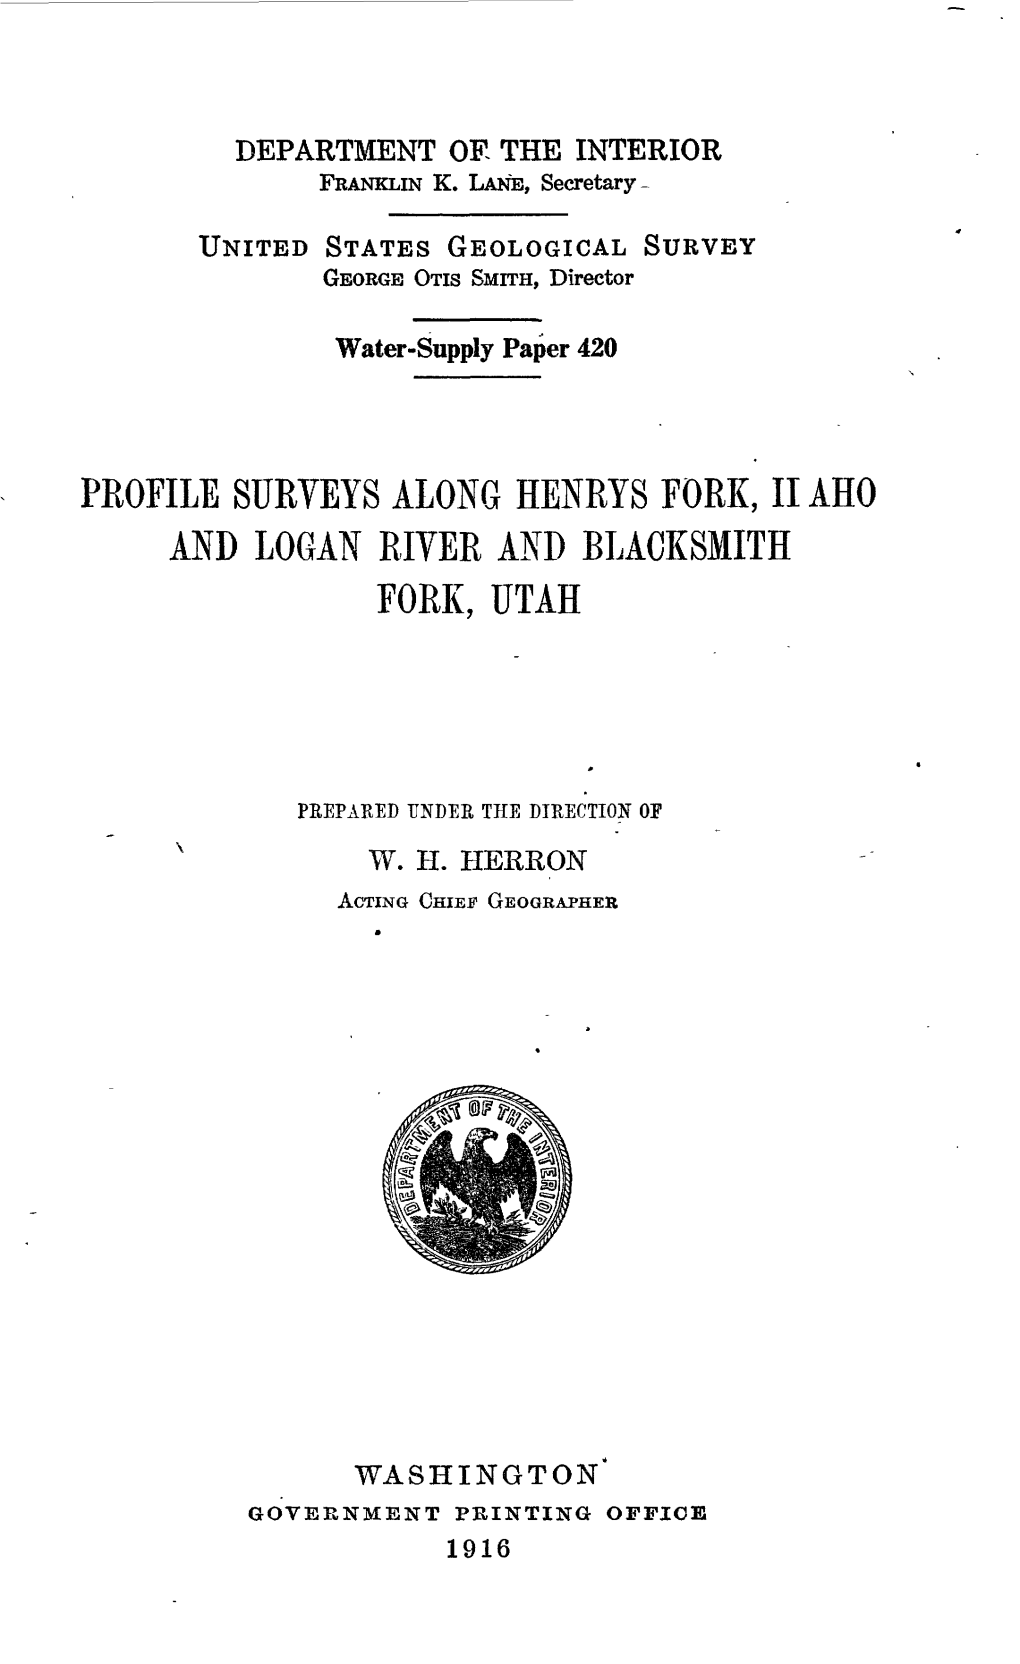 Profile Sueveys Along Henrys Fork, Ii Aho and Logan River and Blacksmith Fork, Utah